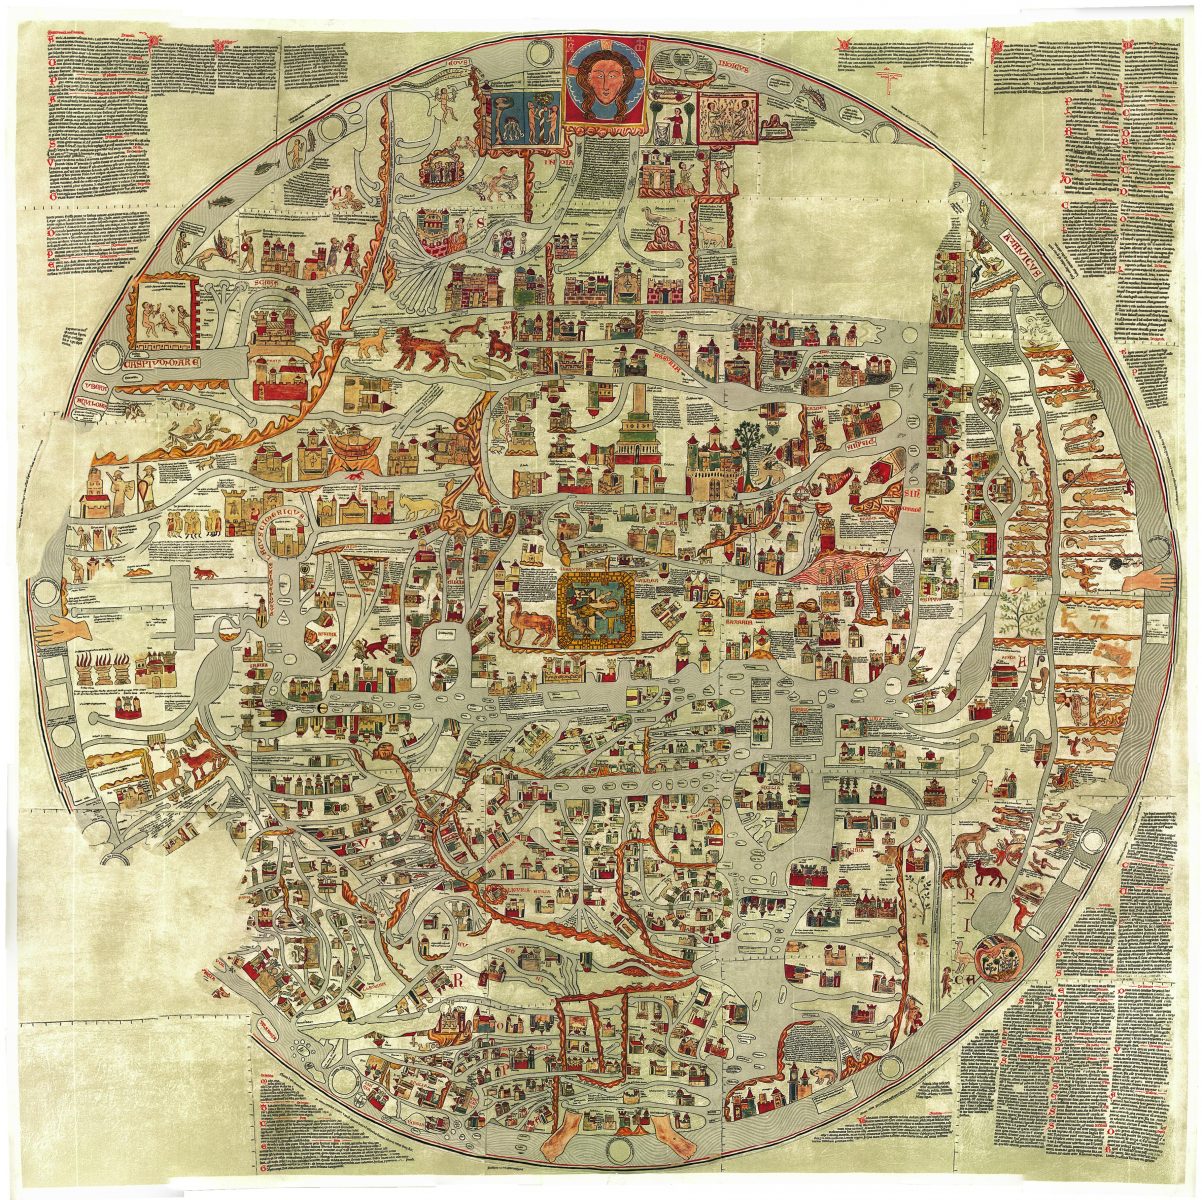 Ebstorfer Weltkarte mit den 4 Hauptflüssen, Hochmittelalter